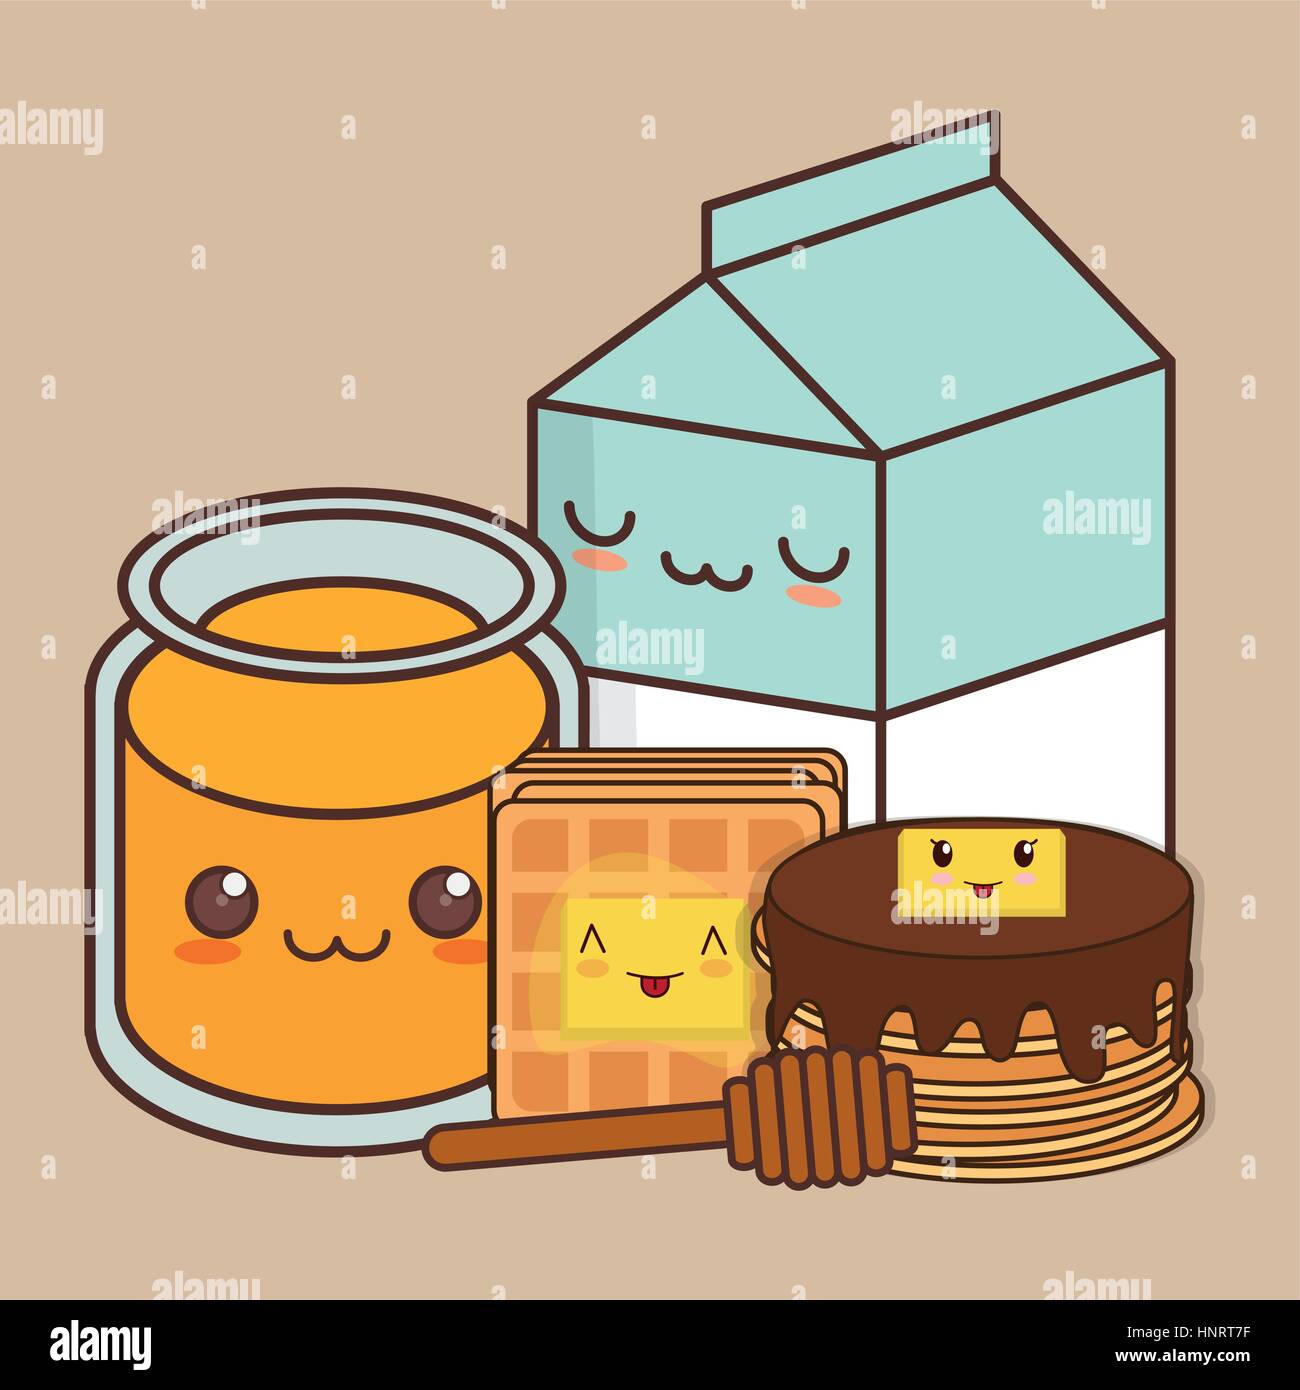 breakfast kawaii food icon image vector illustration design Stock Vector